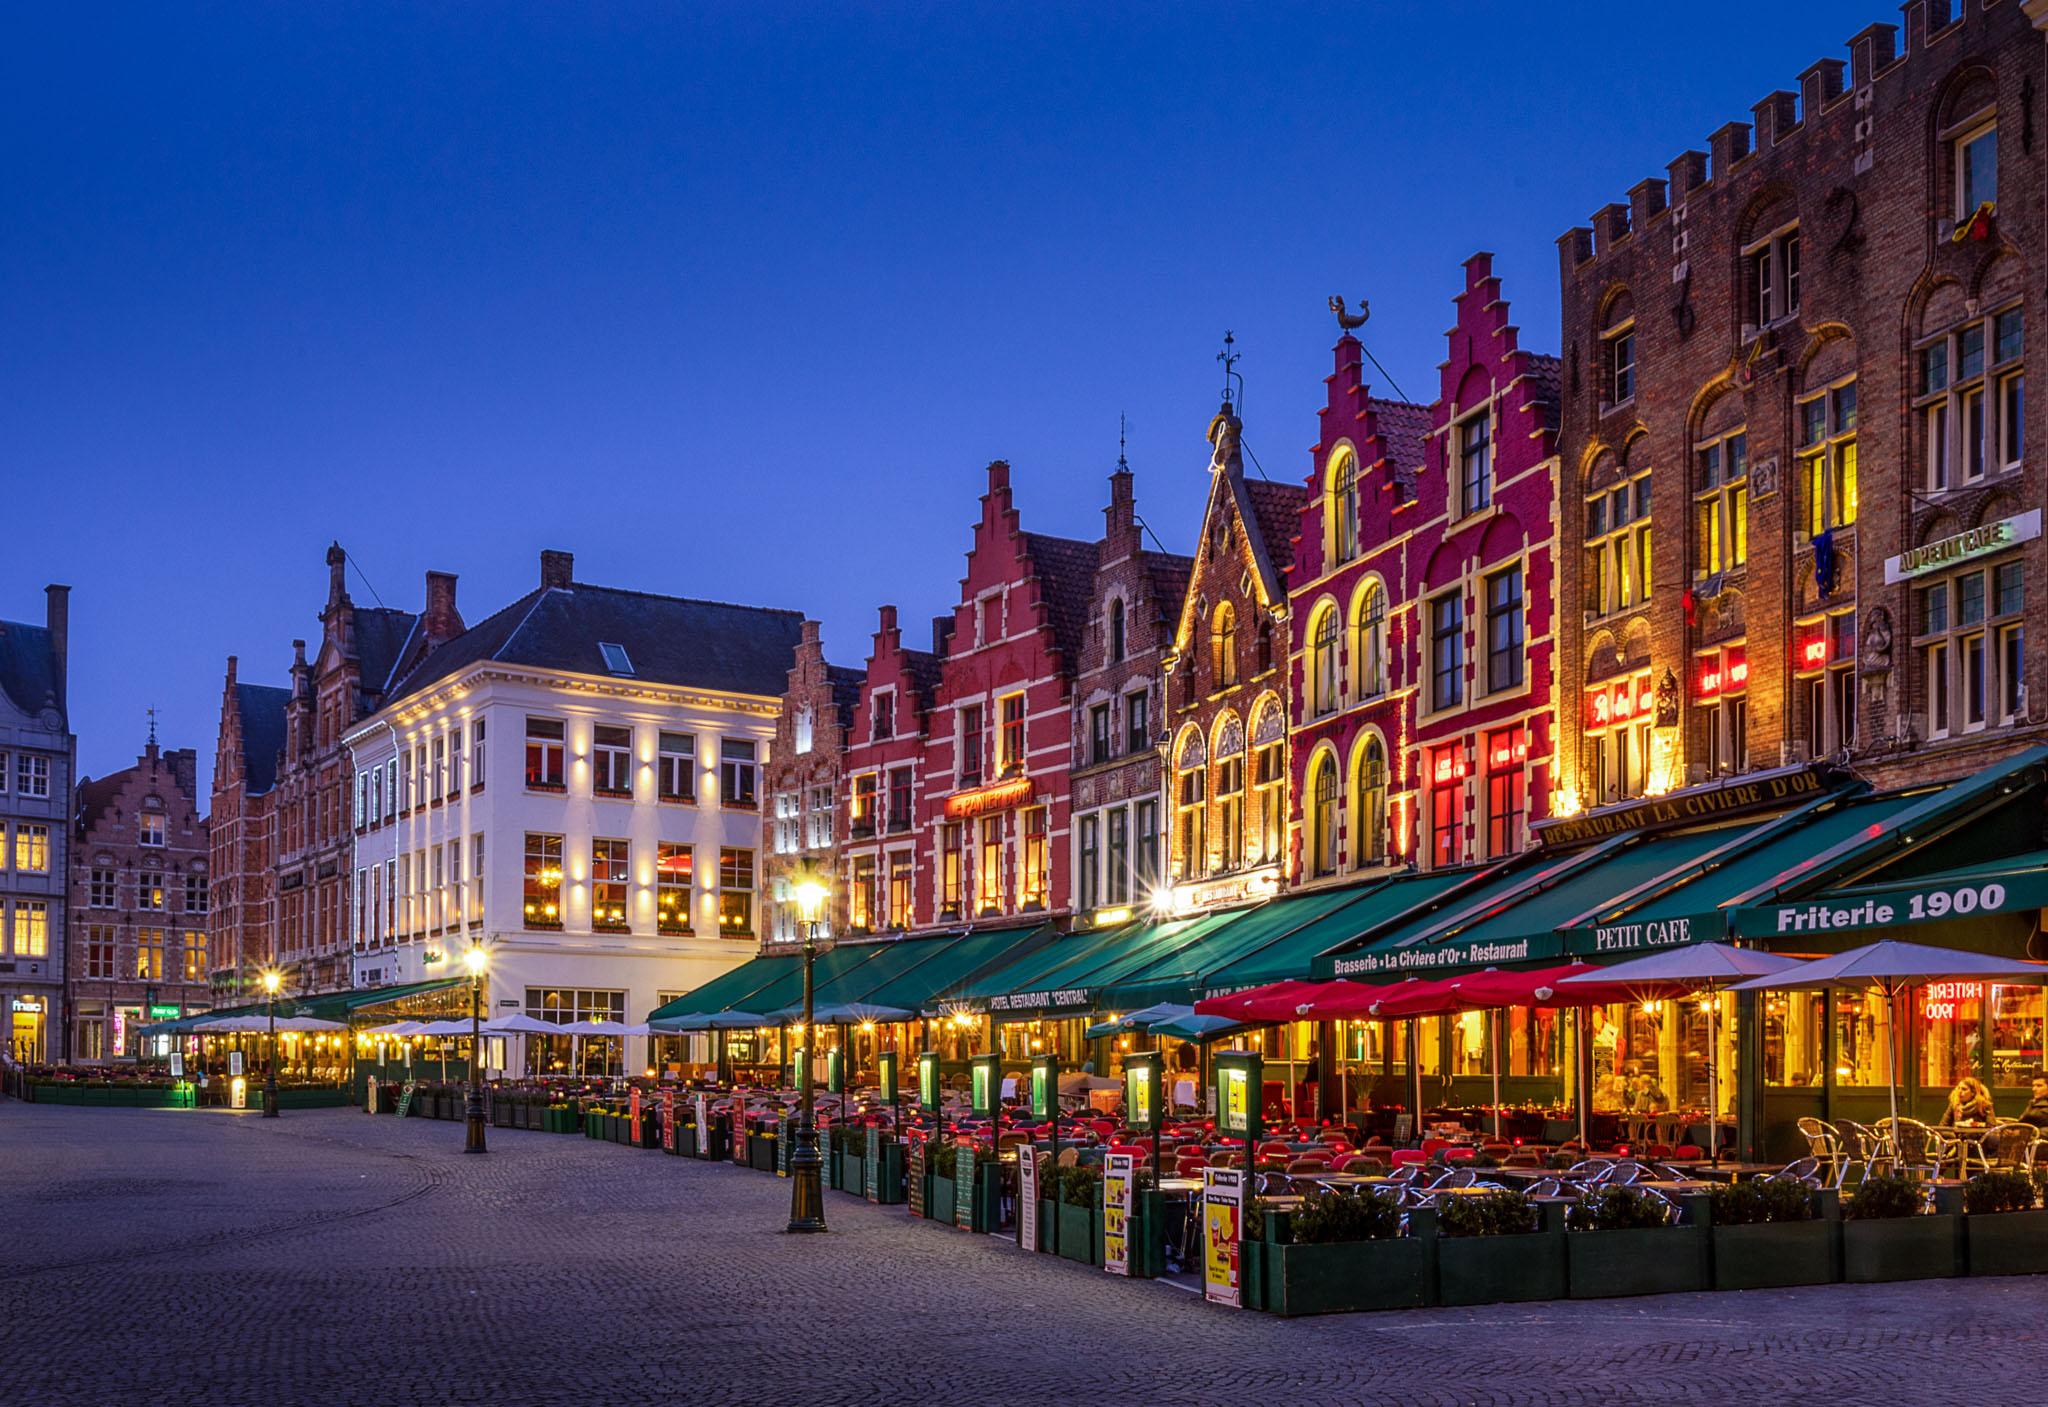 Bruges Belgium Destination Review. Andy's Travel Blog